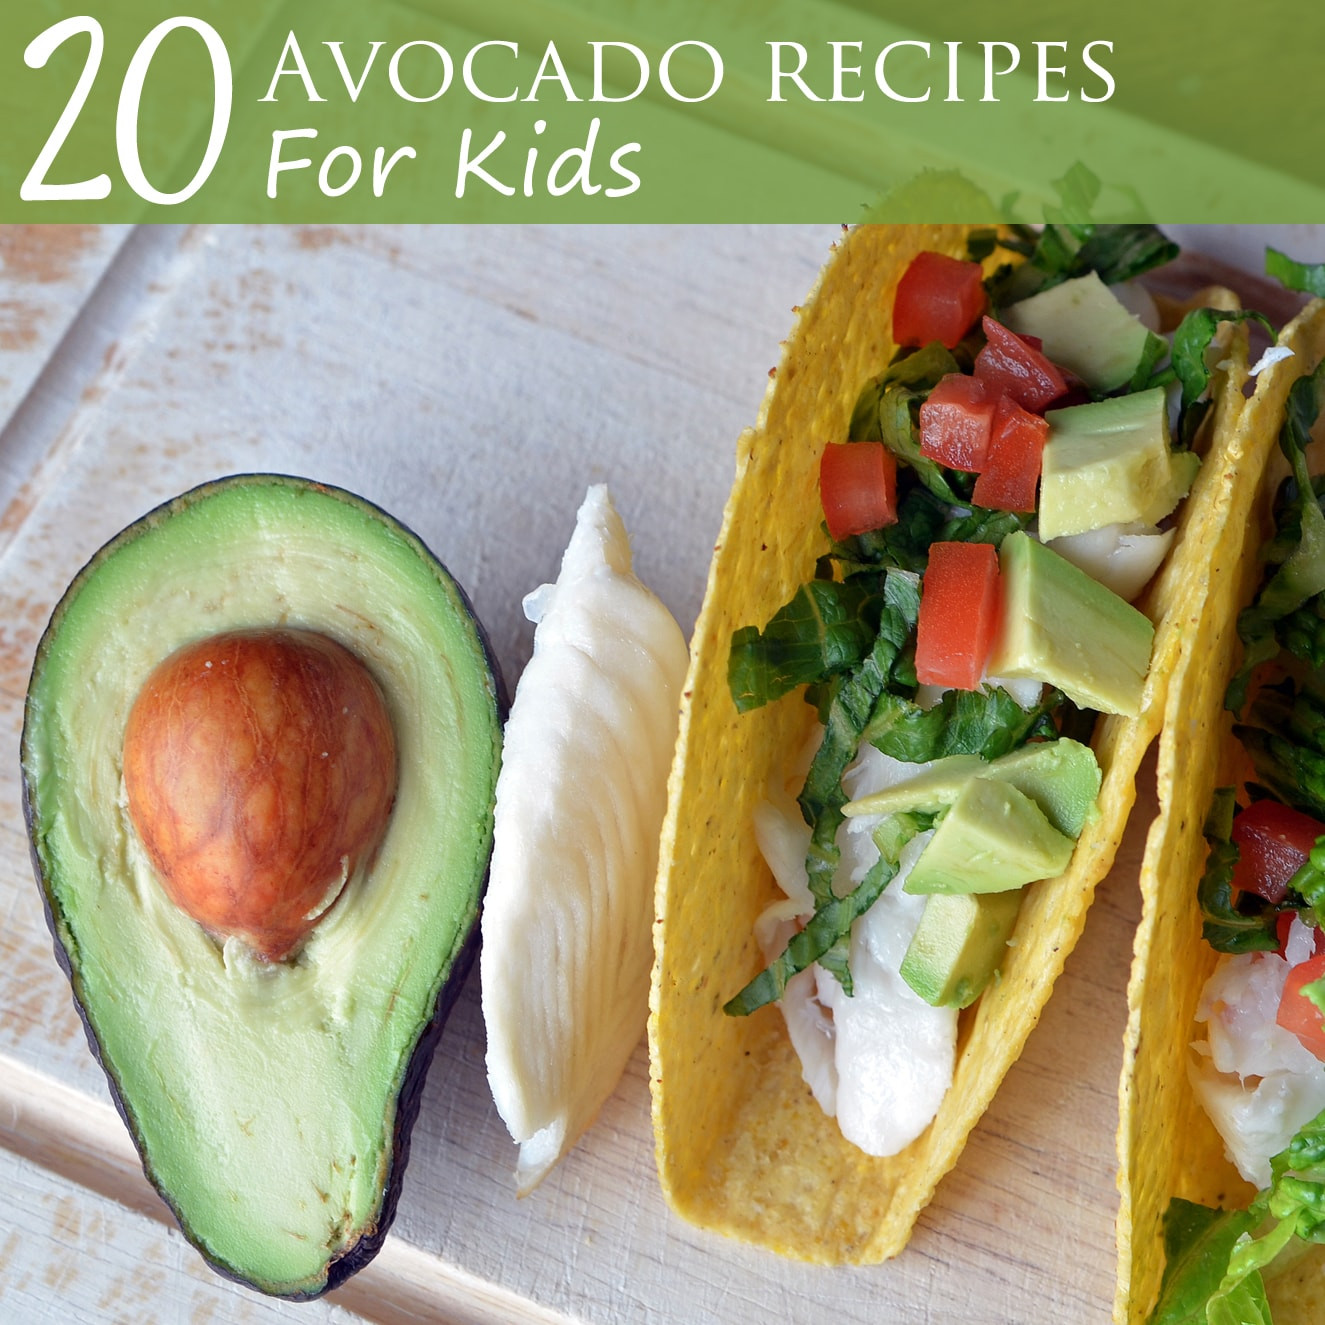 Fun Healthy Recipes For Kids
 20 Avocado Recipes for Kids